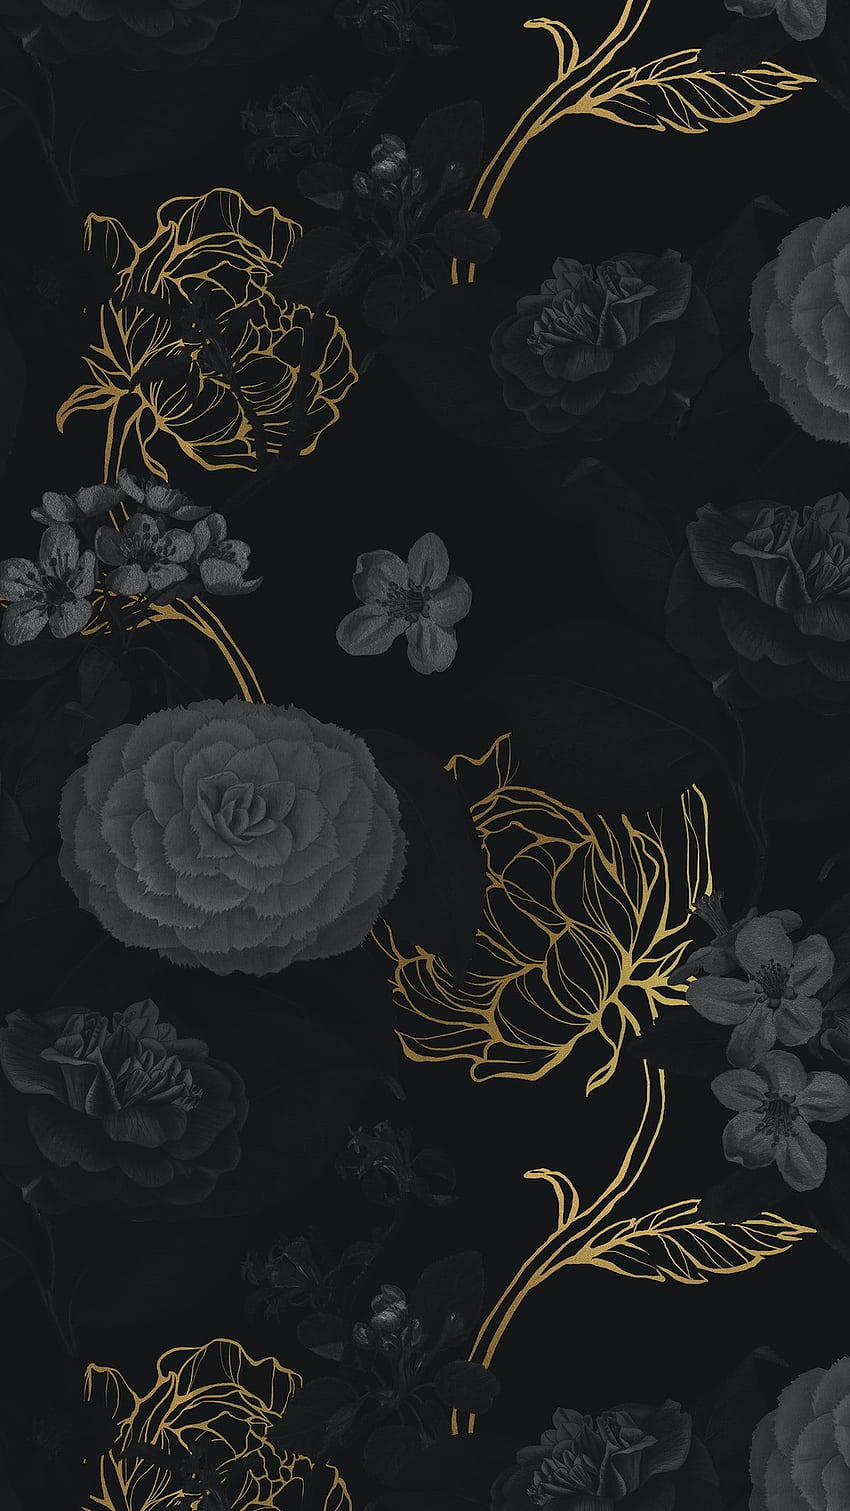 ilustración premium de oscuro dibujado a mano y estampado de flores doradas en 2021. Teléfono oscuro, Iphone negro oscuro, negro fondo de pantalla del teléfono